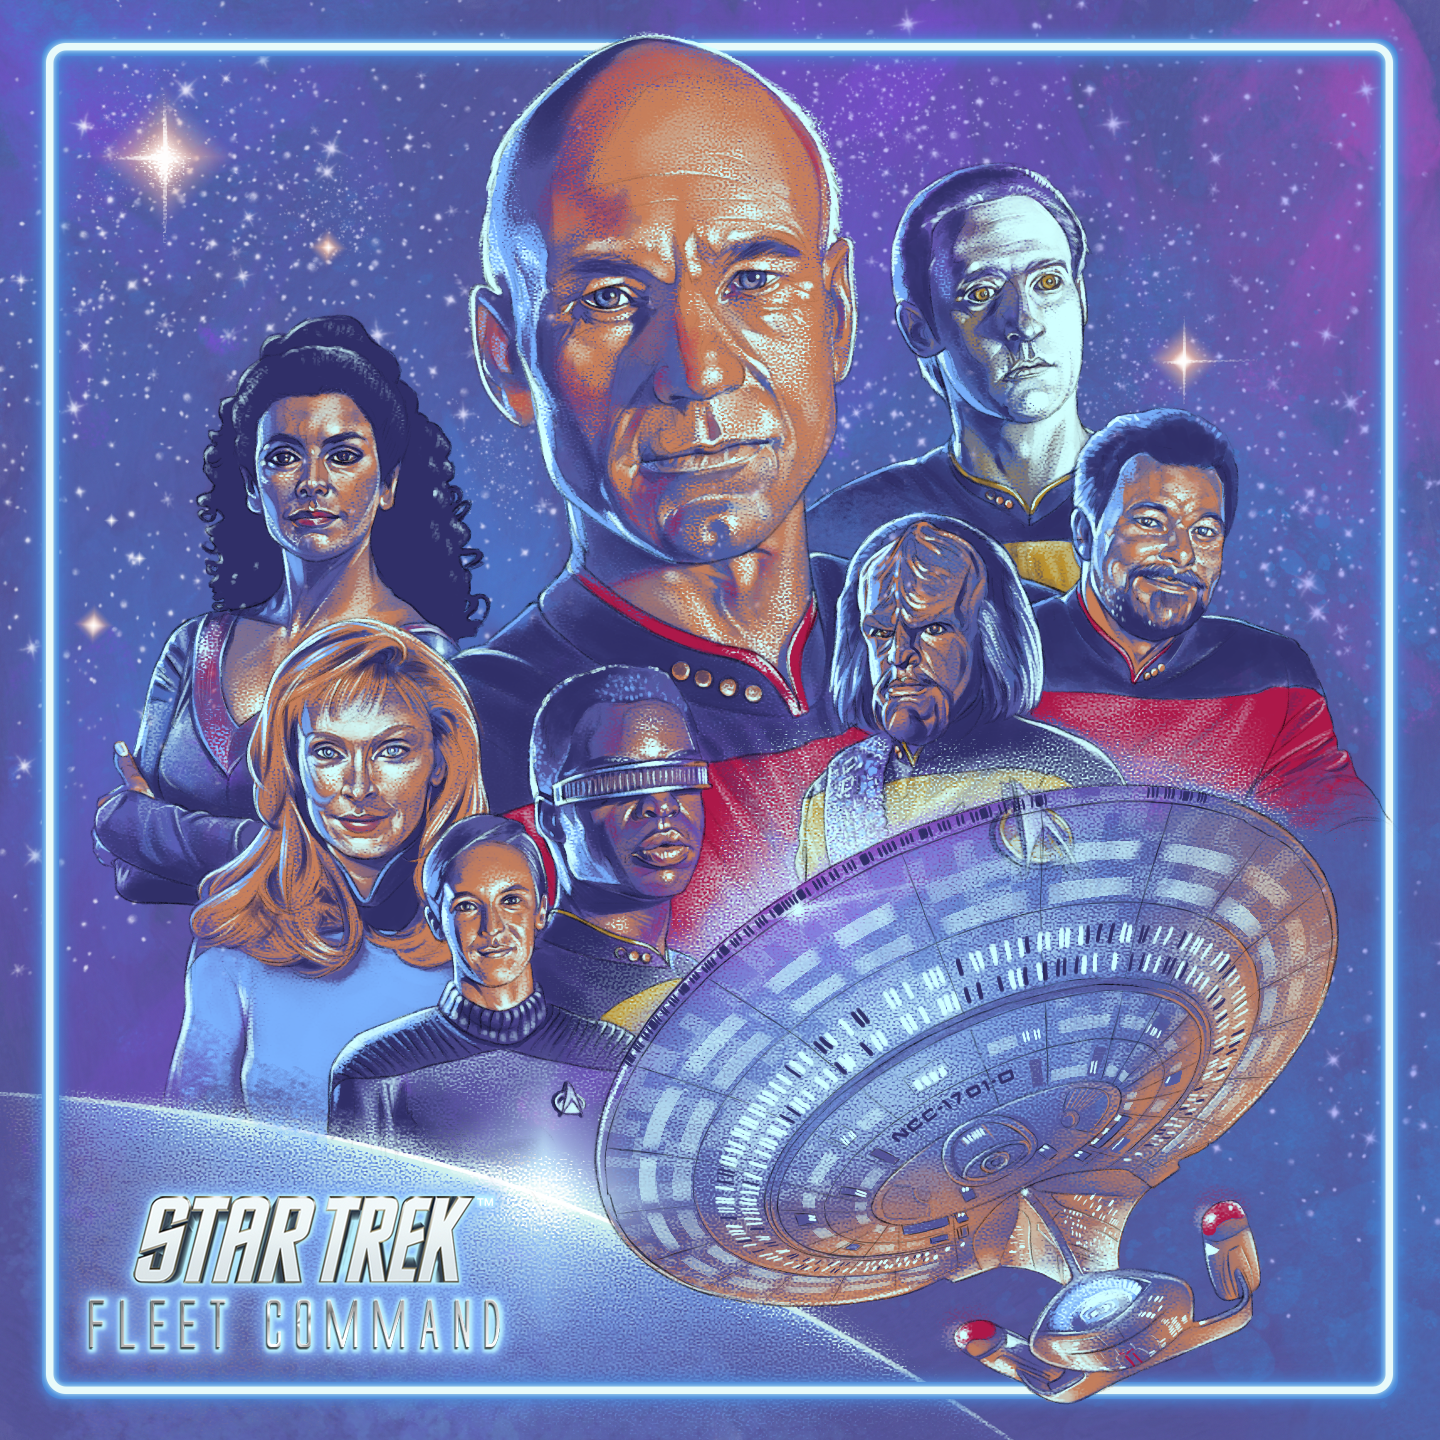 Star Trek Poster by Liza Shumskaya